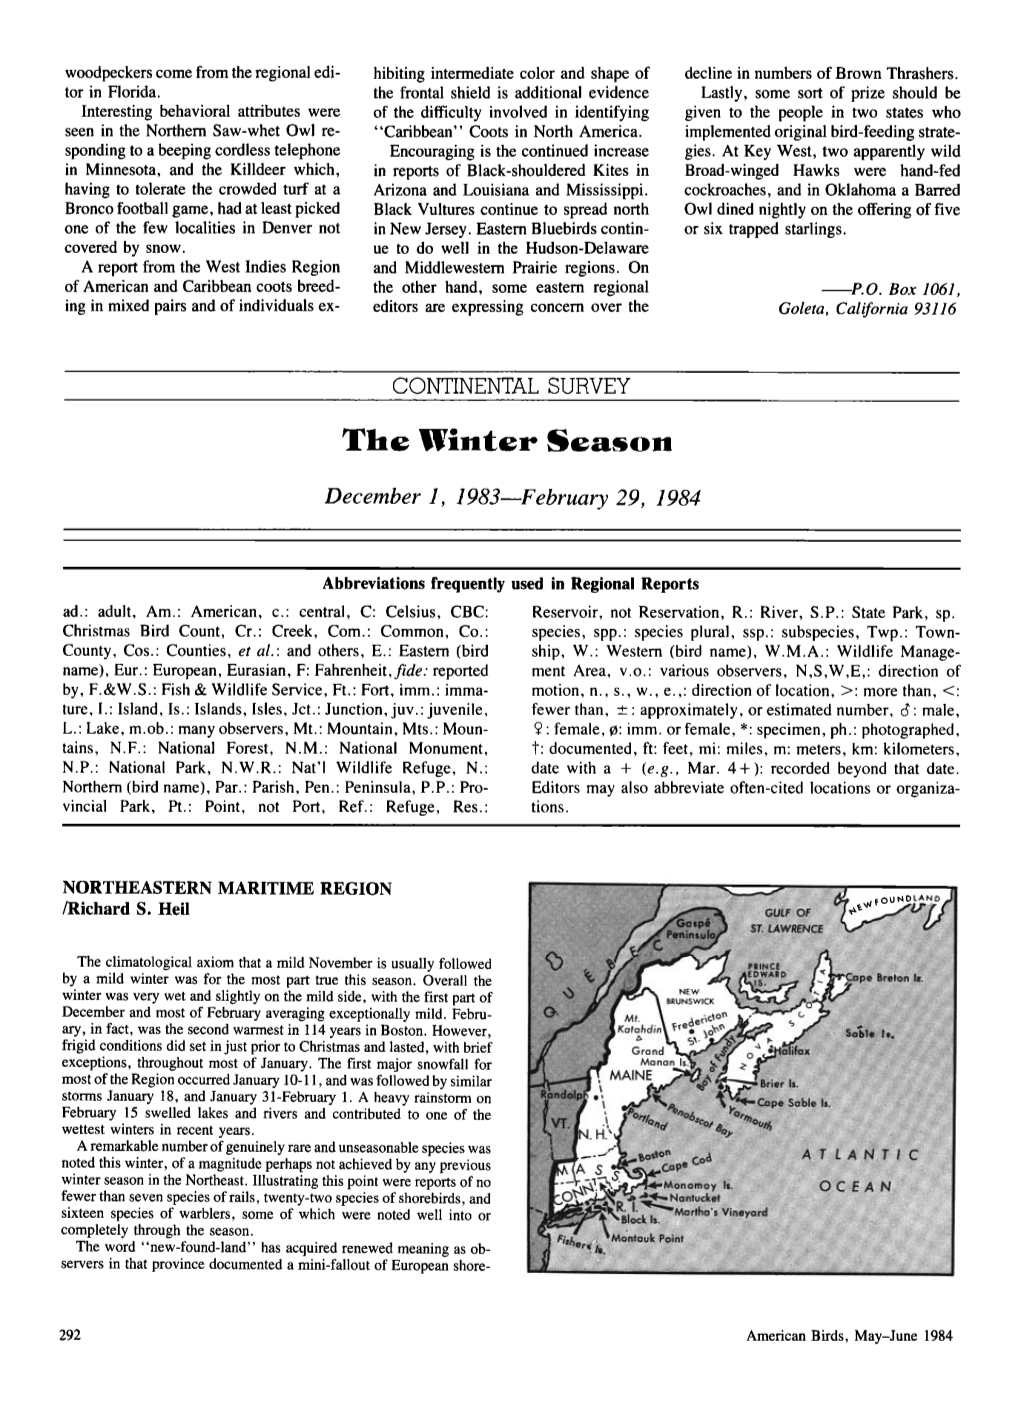 The Winter Season December 1, 1983-February 29, 1984